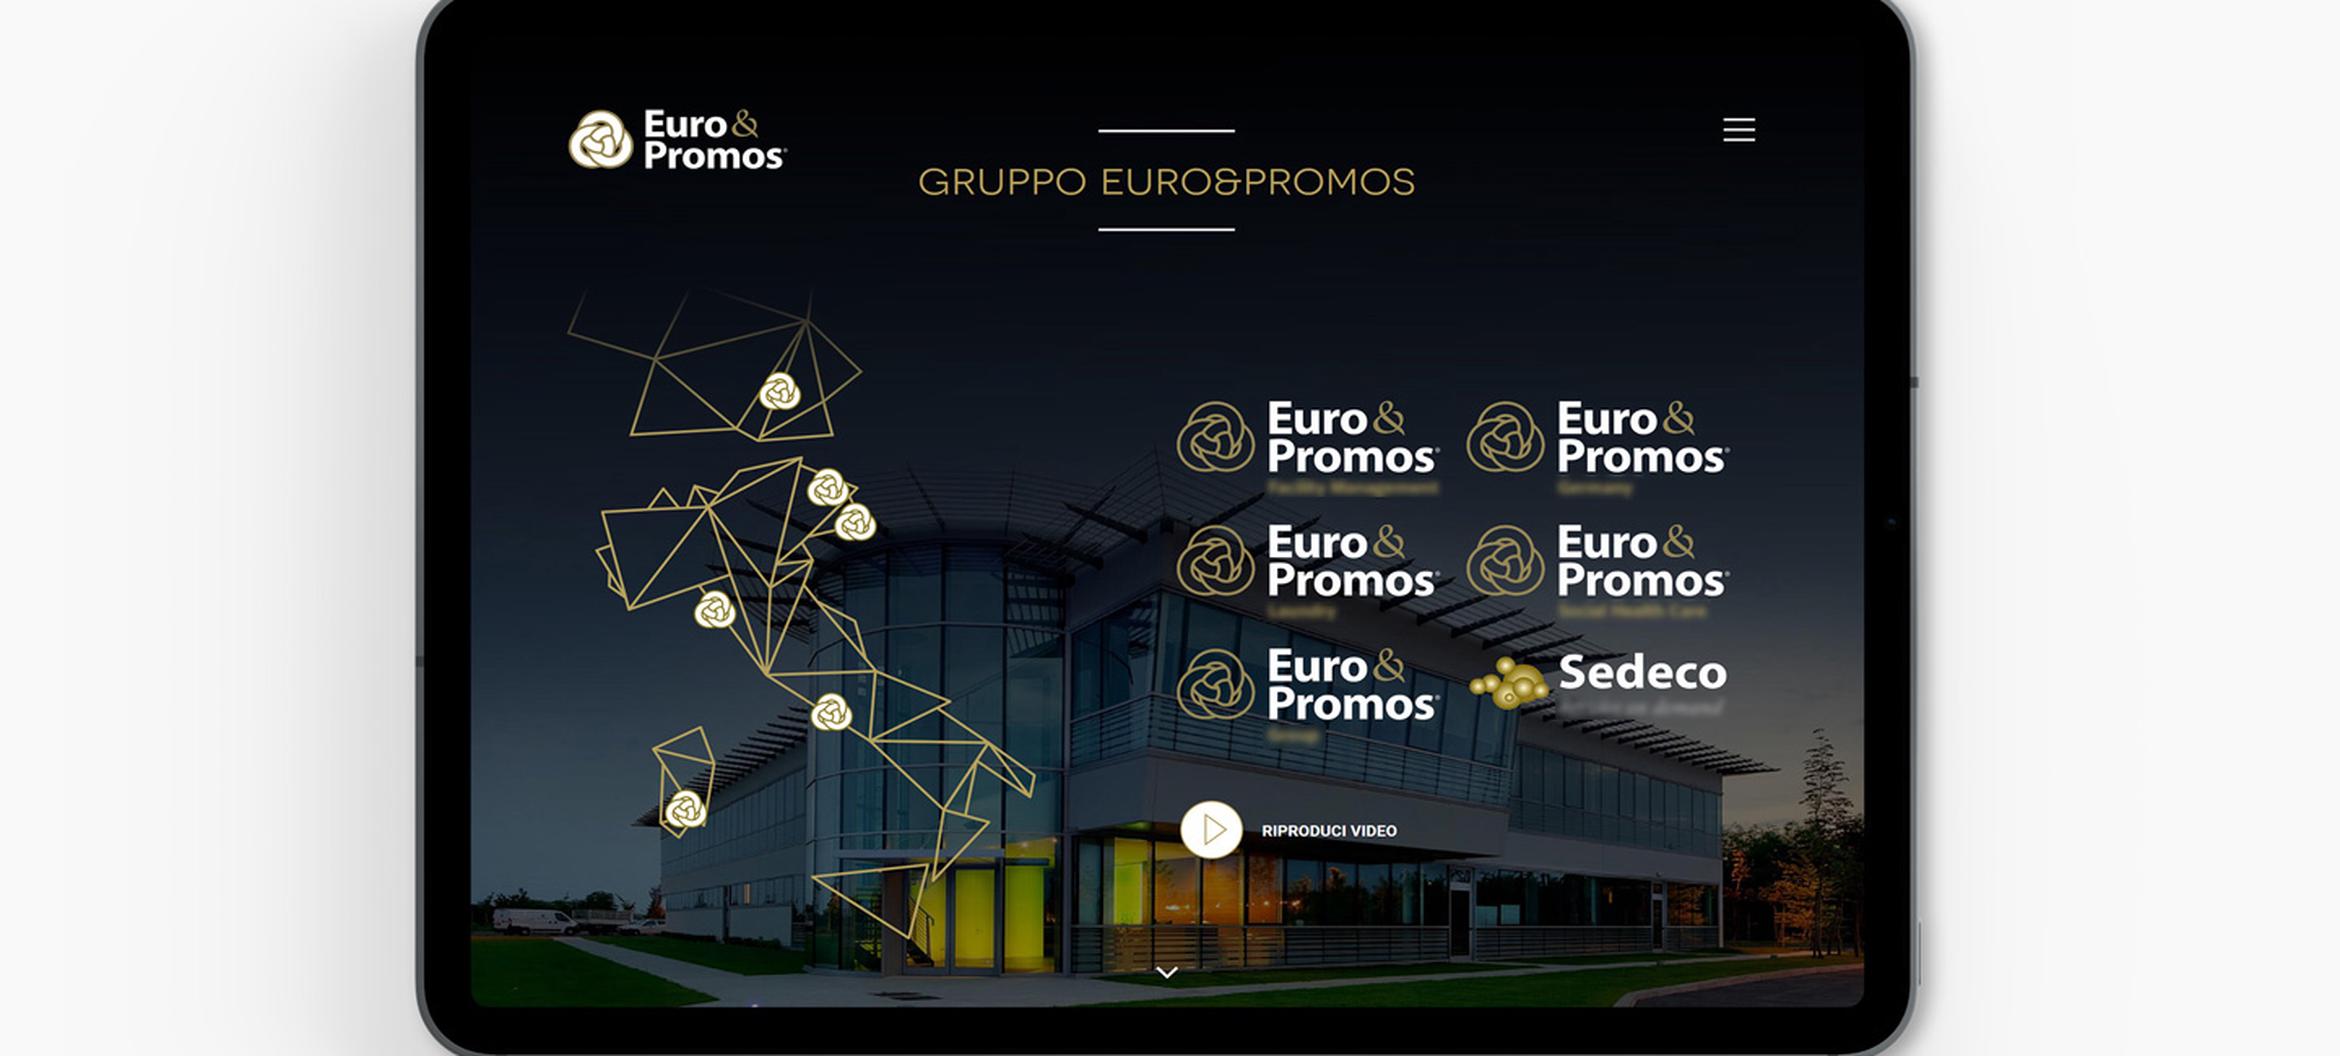 Euro&Promos App Enterprise 